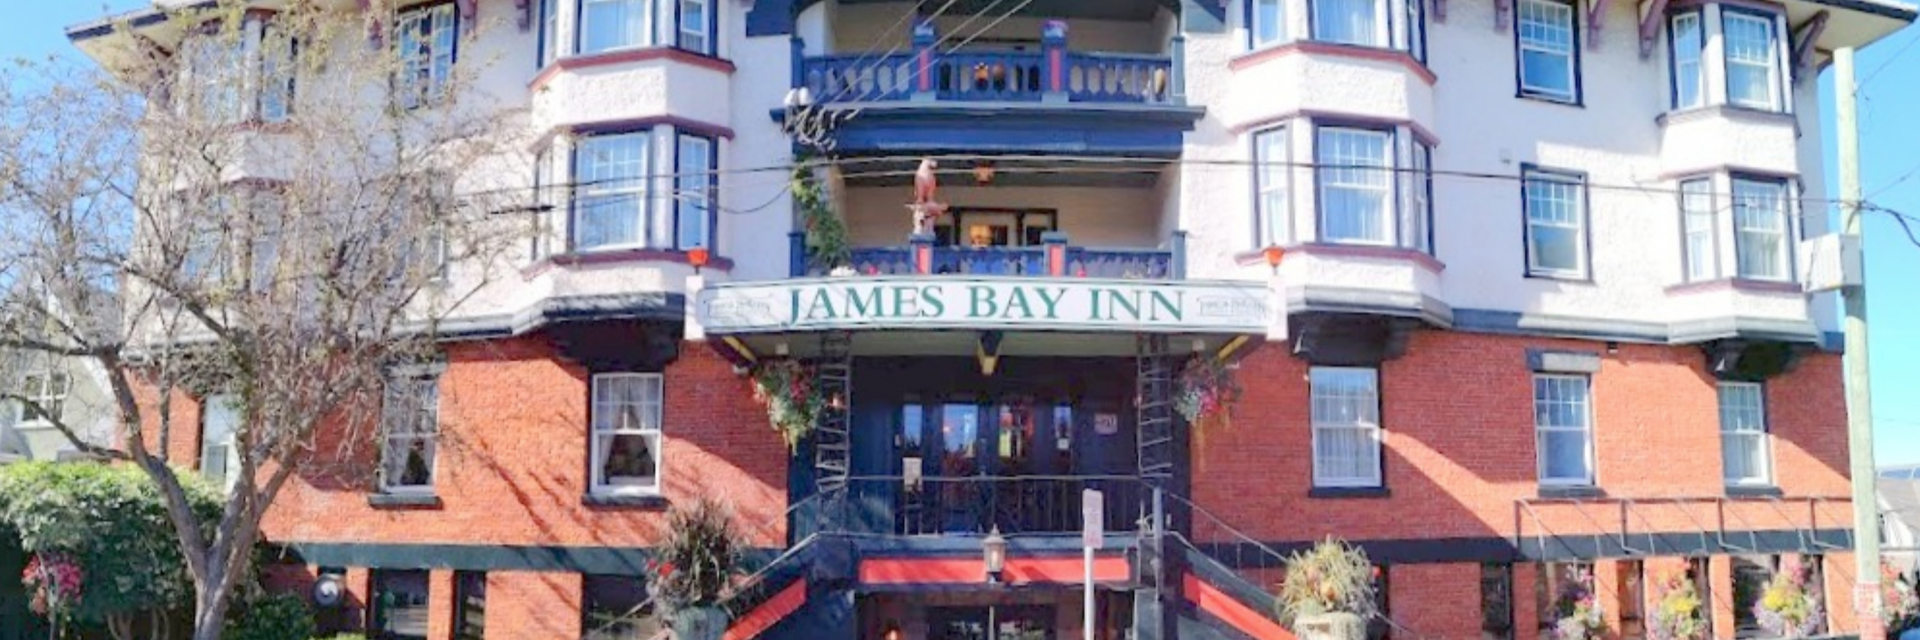 James Bay Inn - Exterior